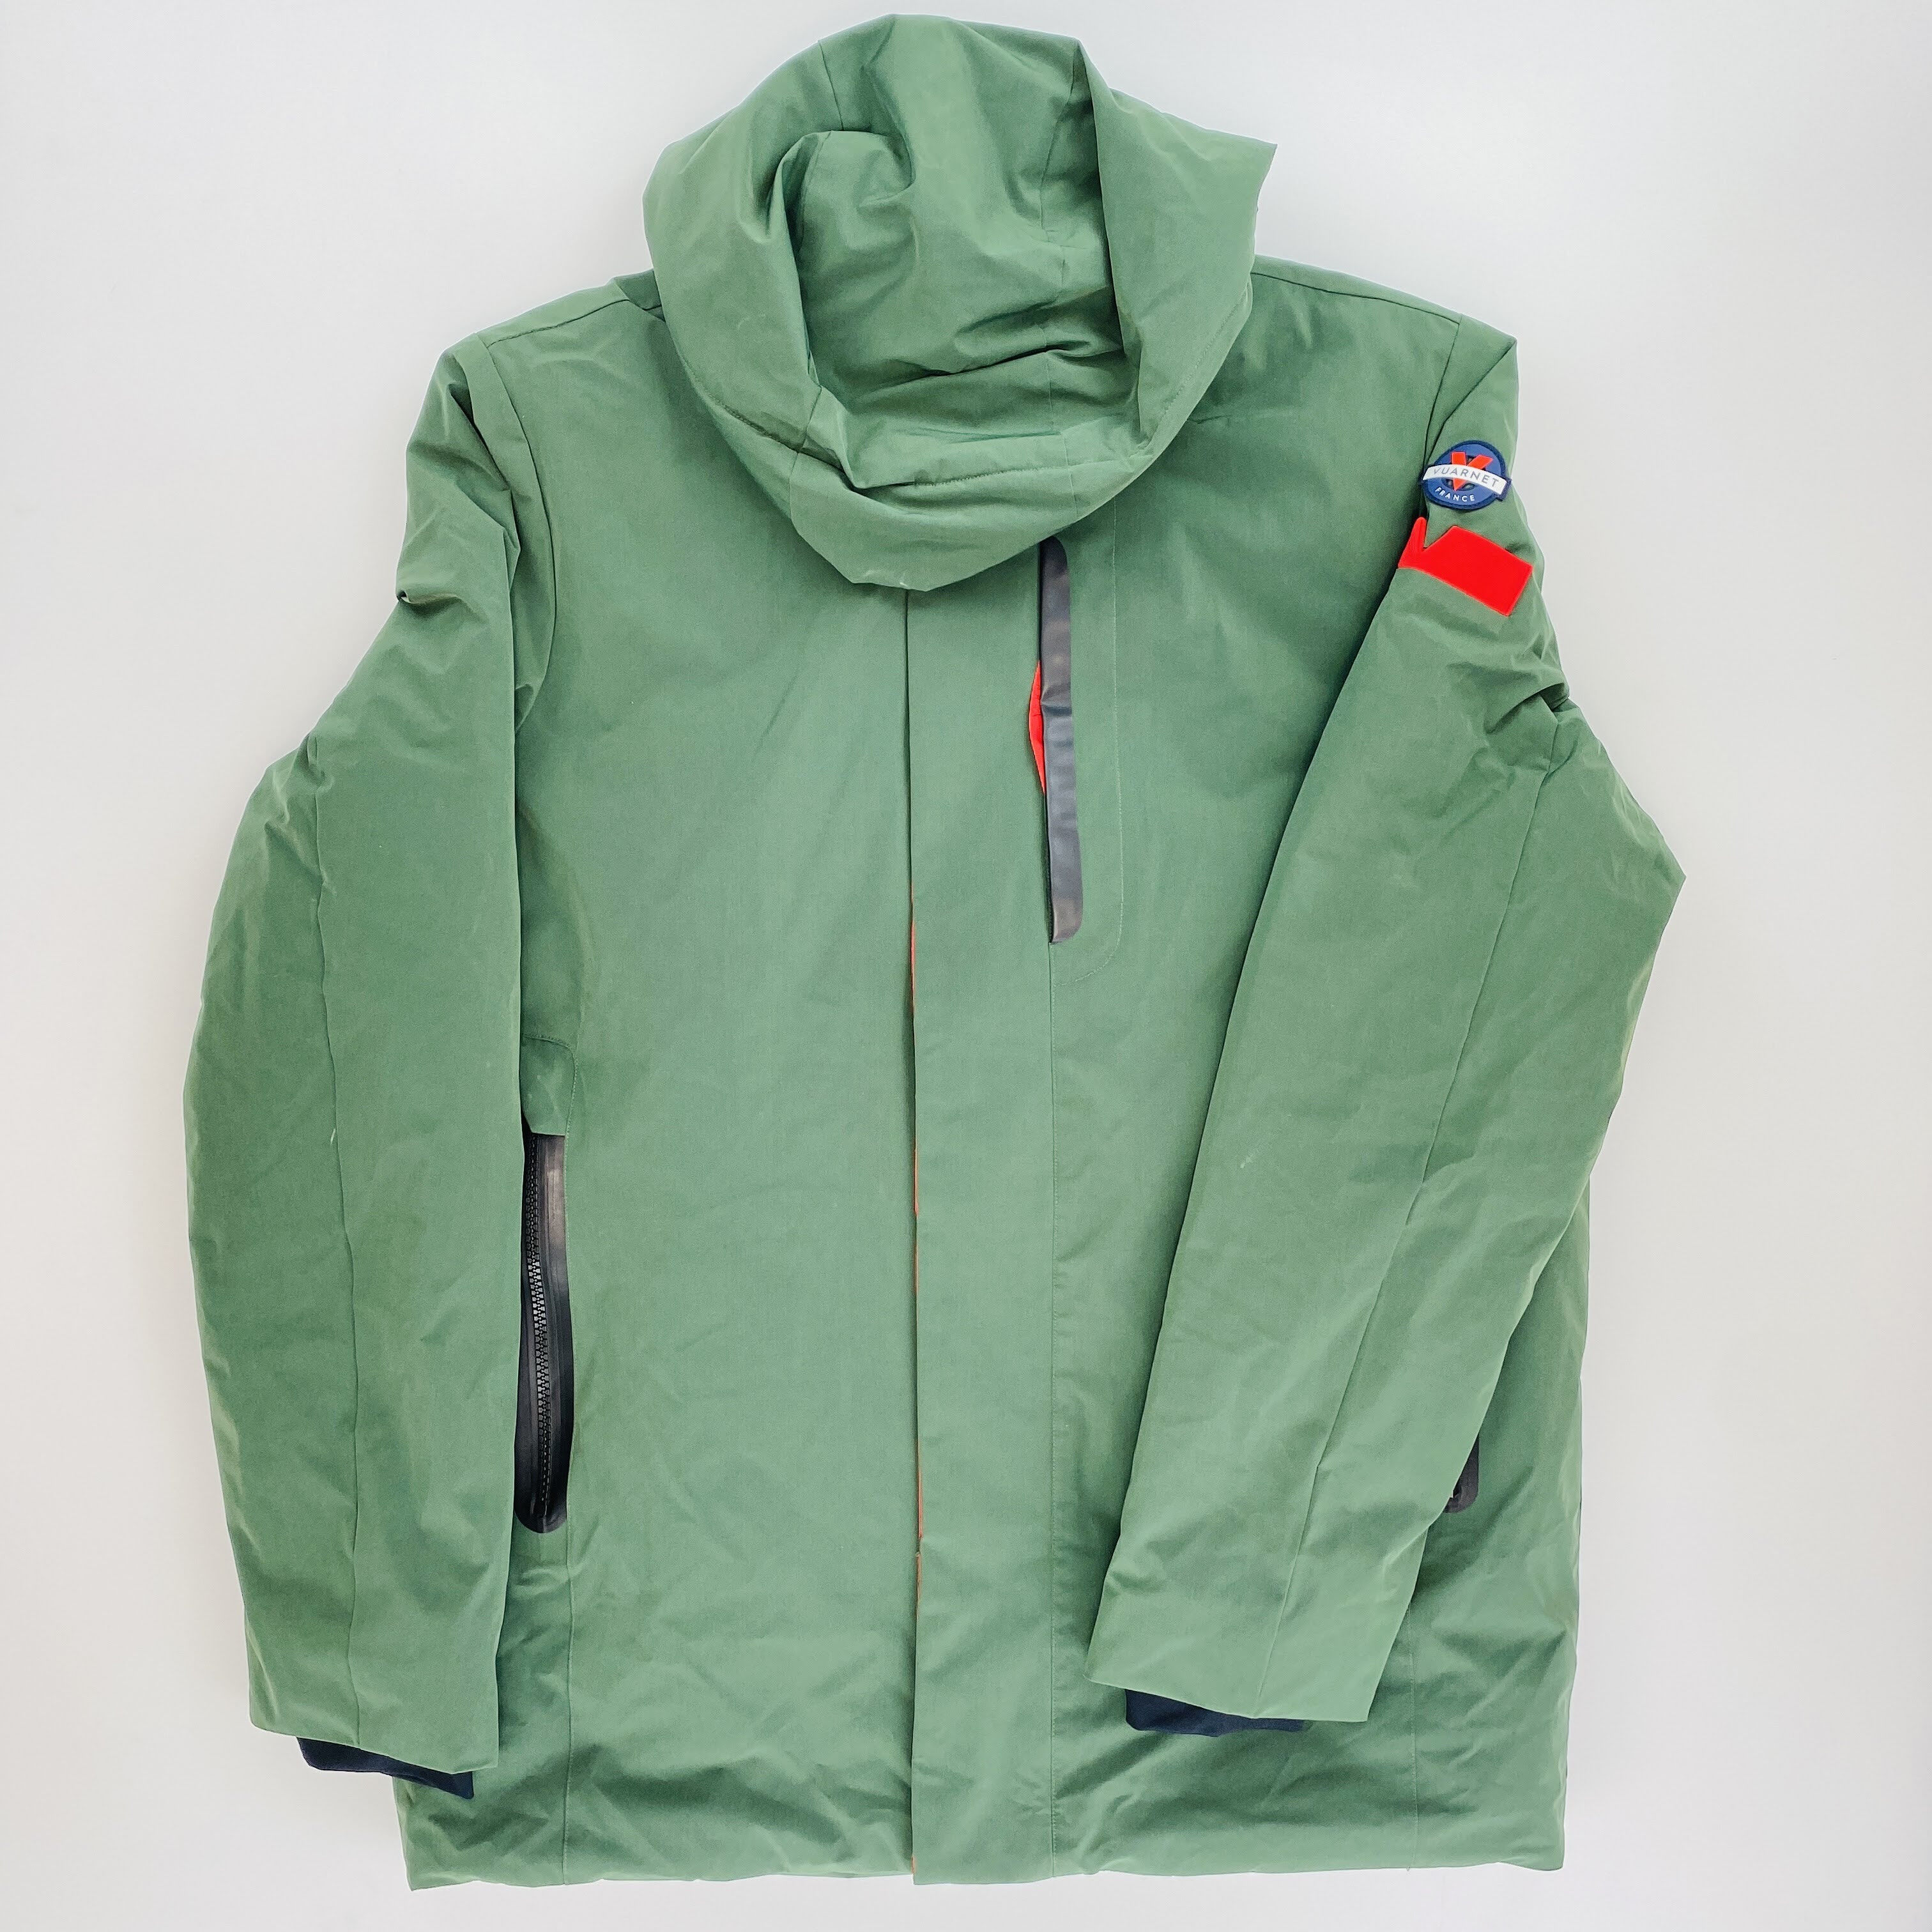 Vuarnet Orta Jacket - Second Hand Synthetic jacket - Men's - Green - L | Hardloop